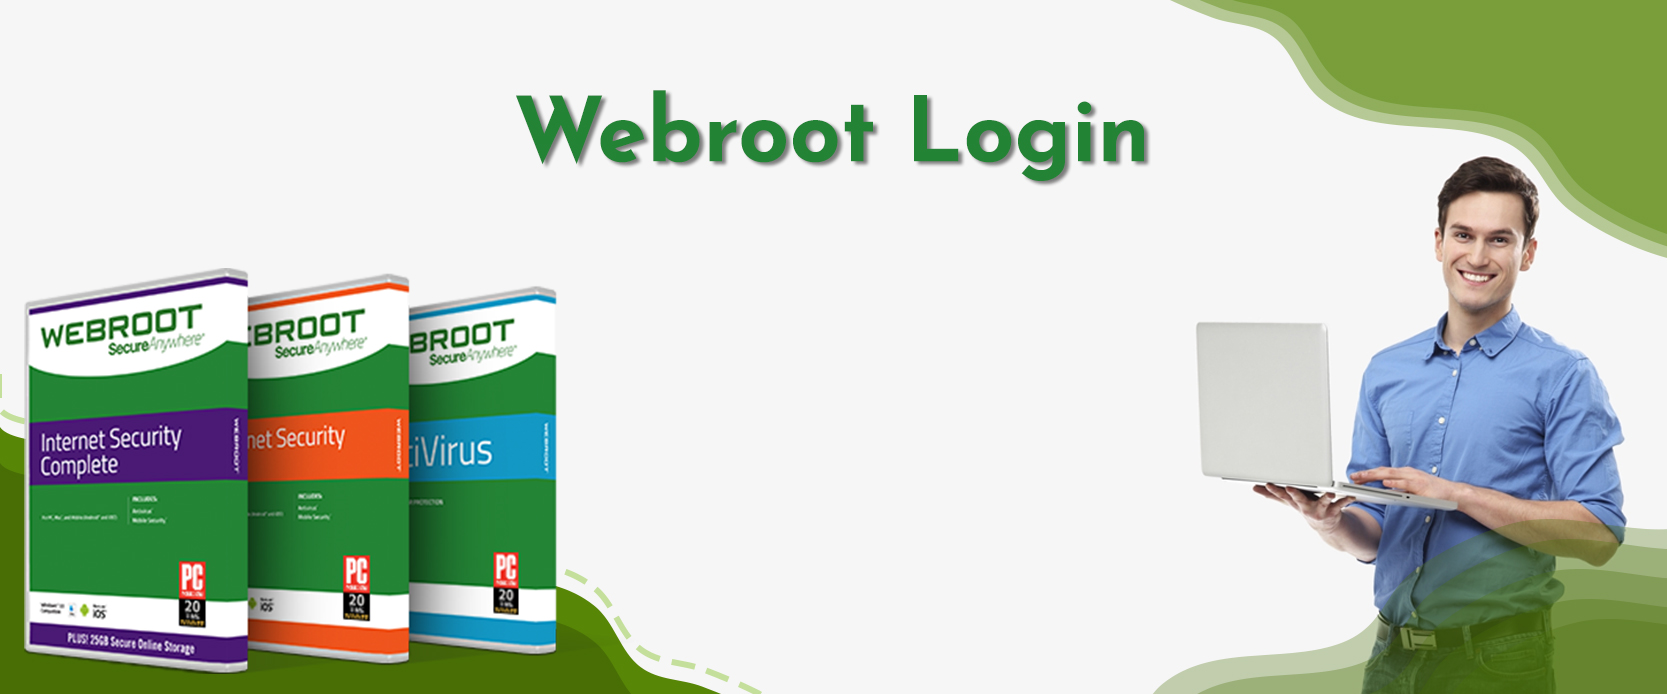 Webroot Login | Webroot Sign in | Webrootanywhere.com Login